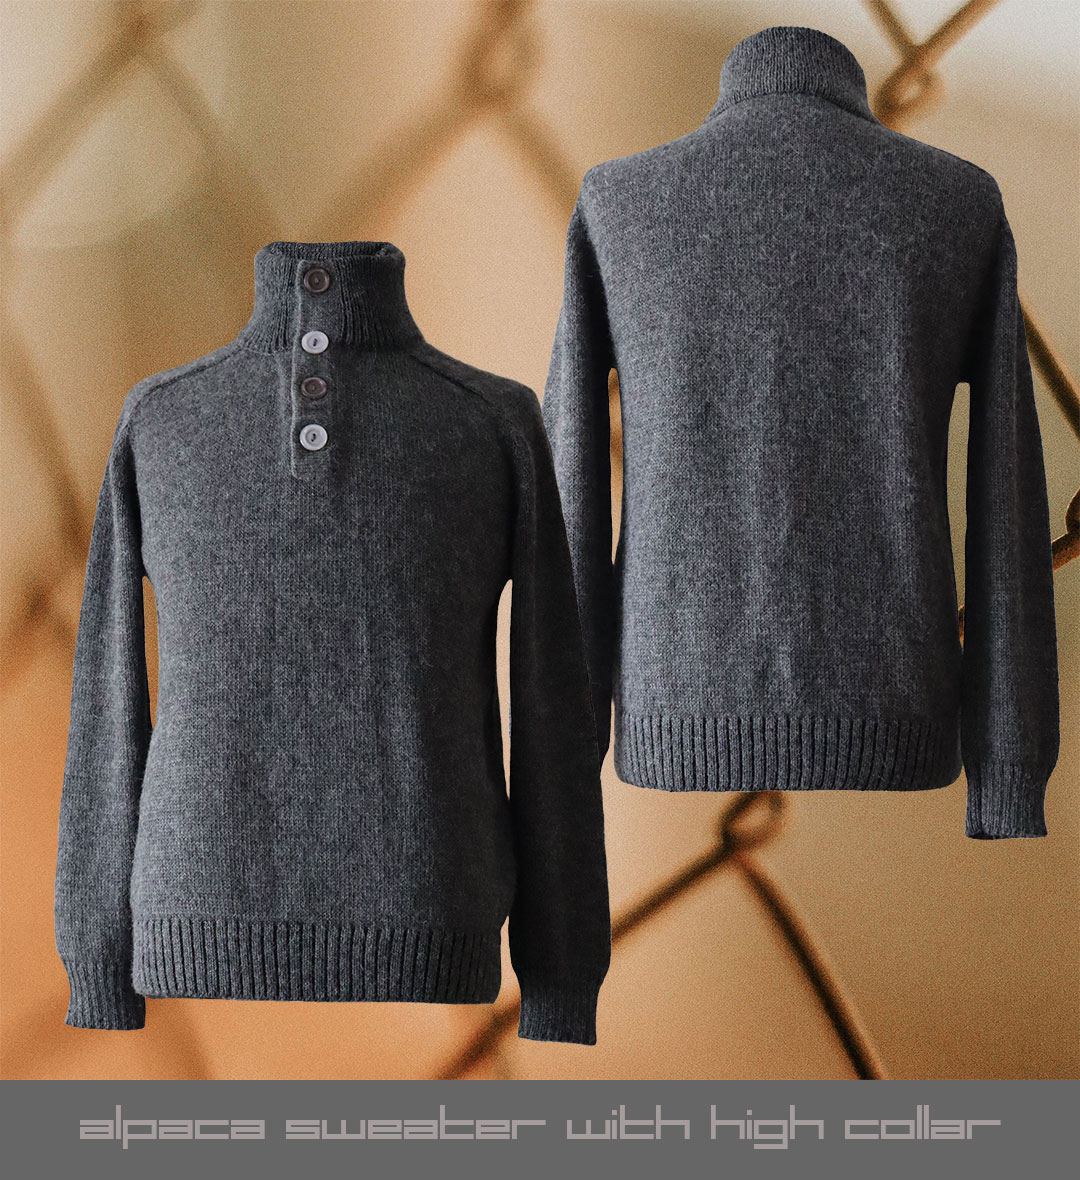 PFL knitwear men alpaca sweater high collar